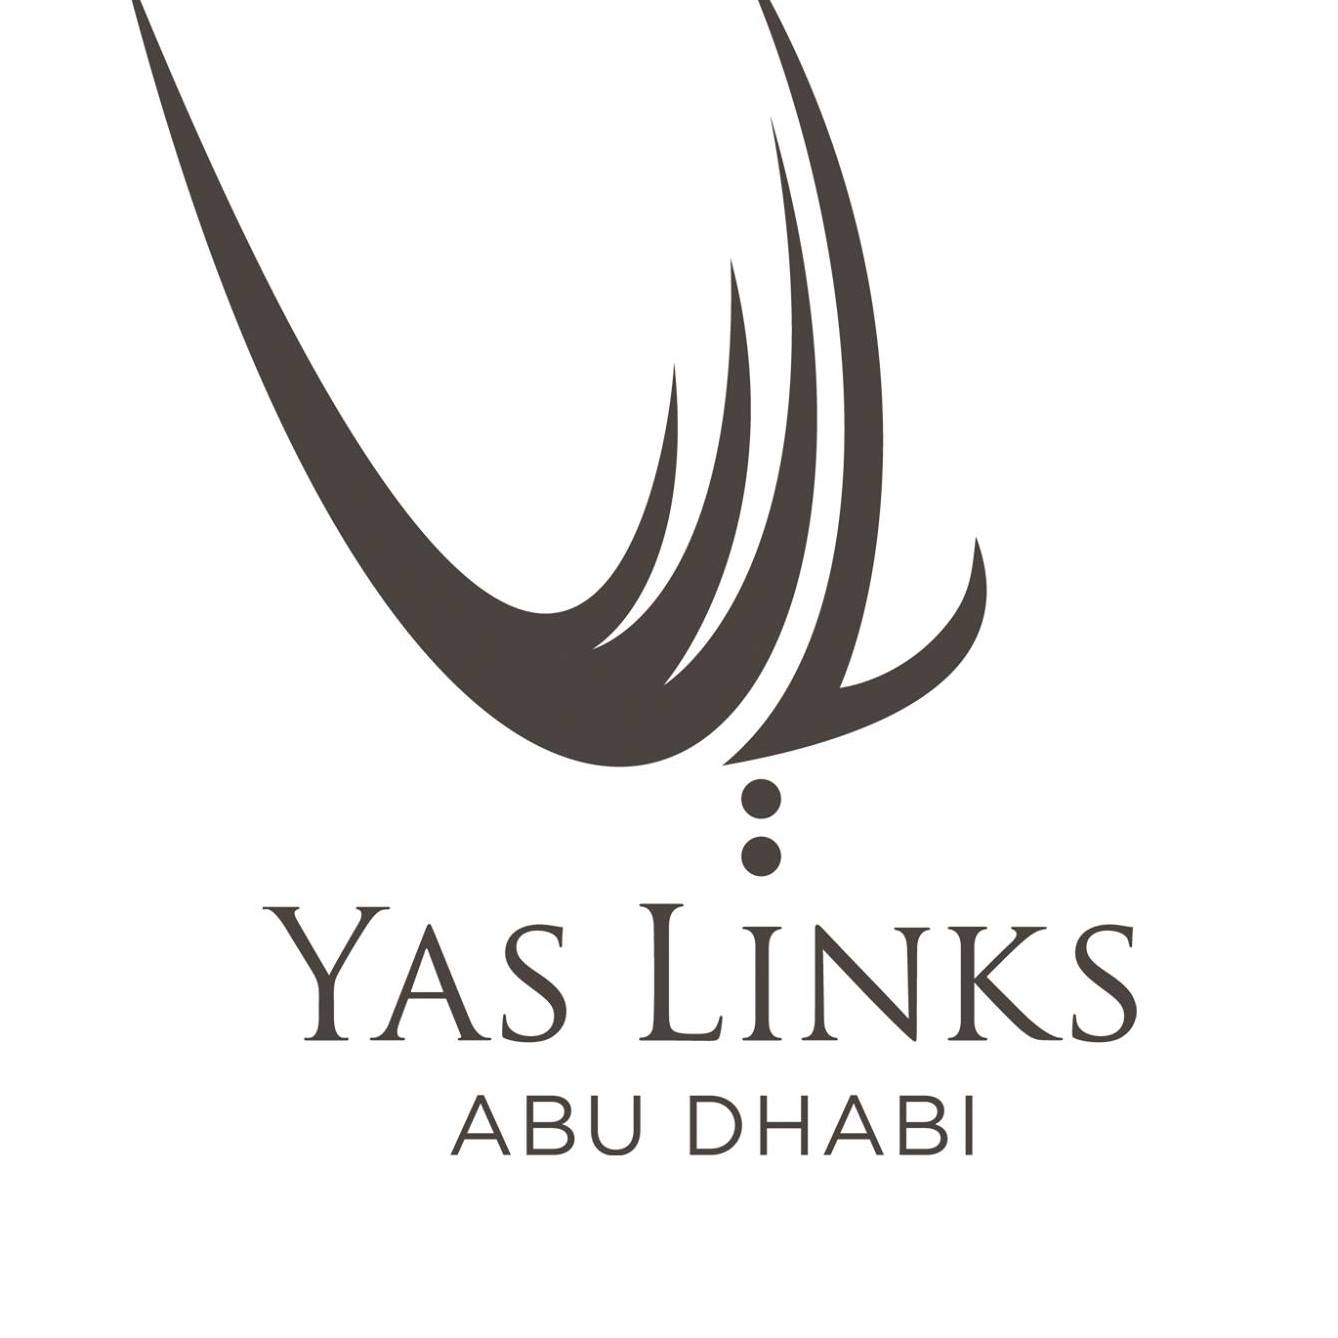 Yas Links in Yas Island